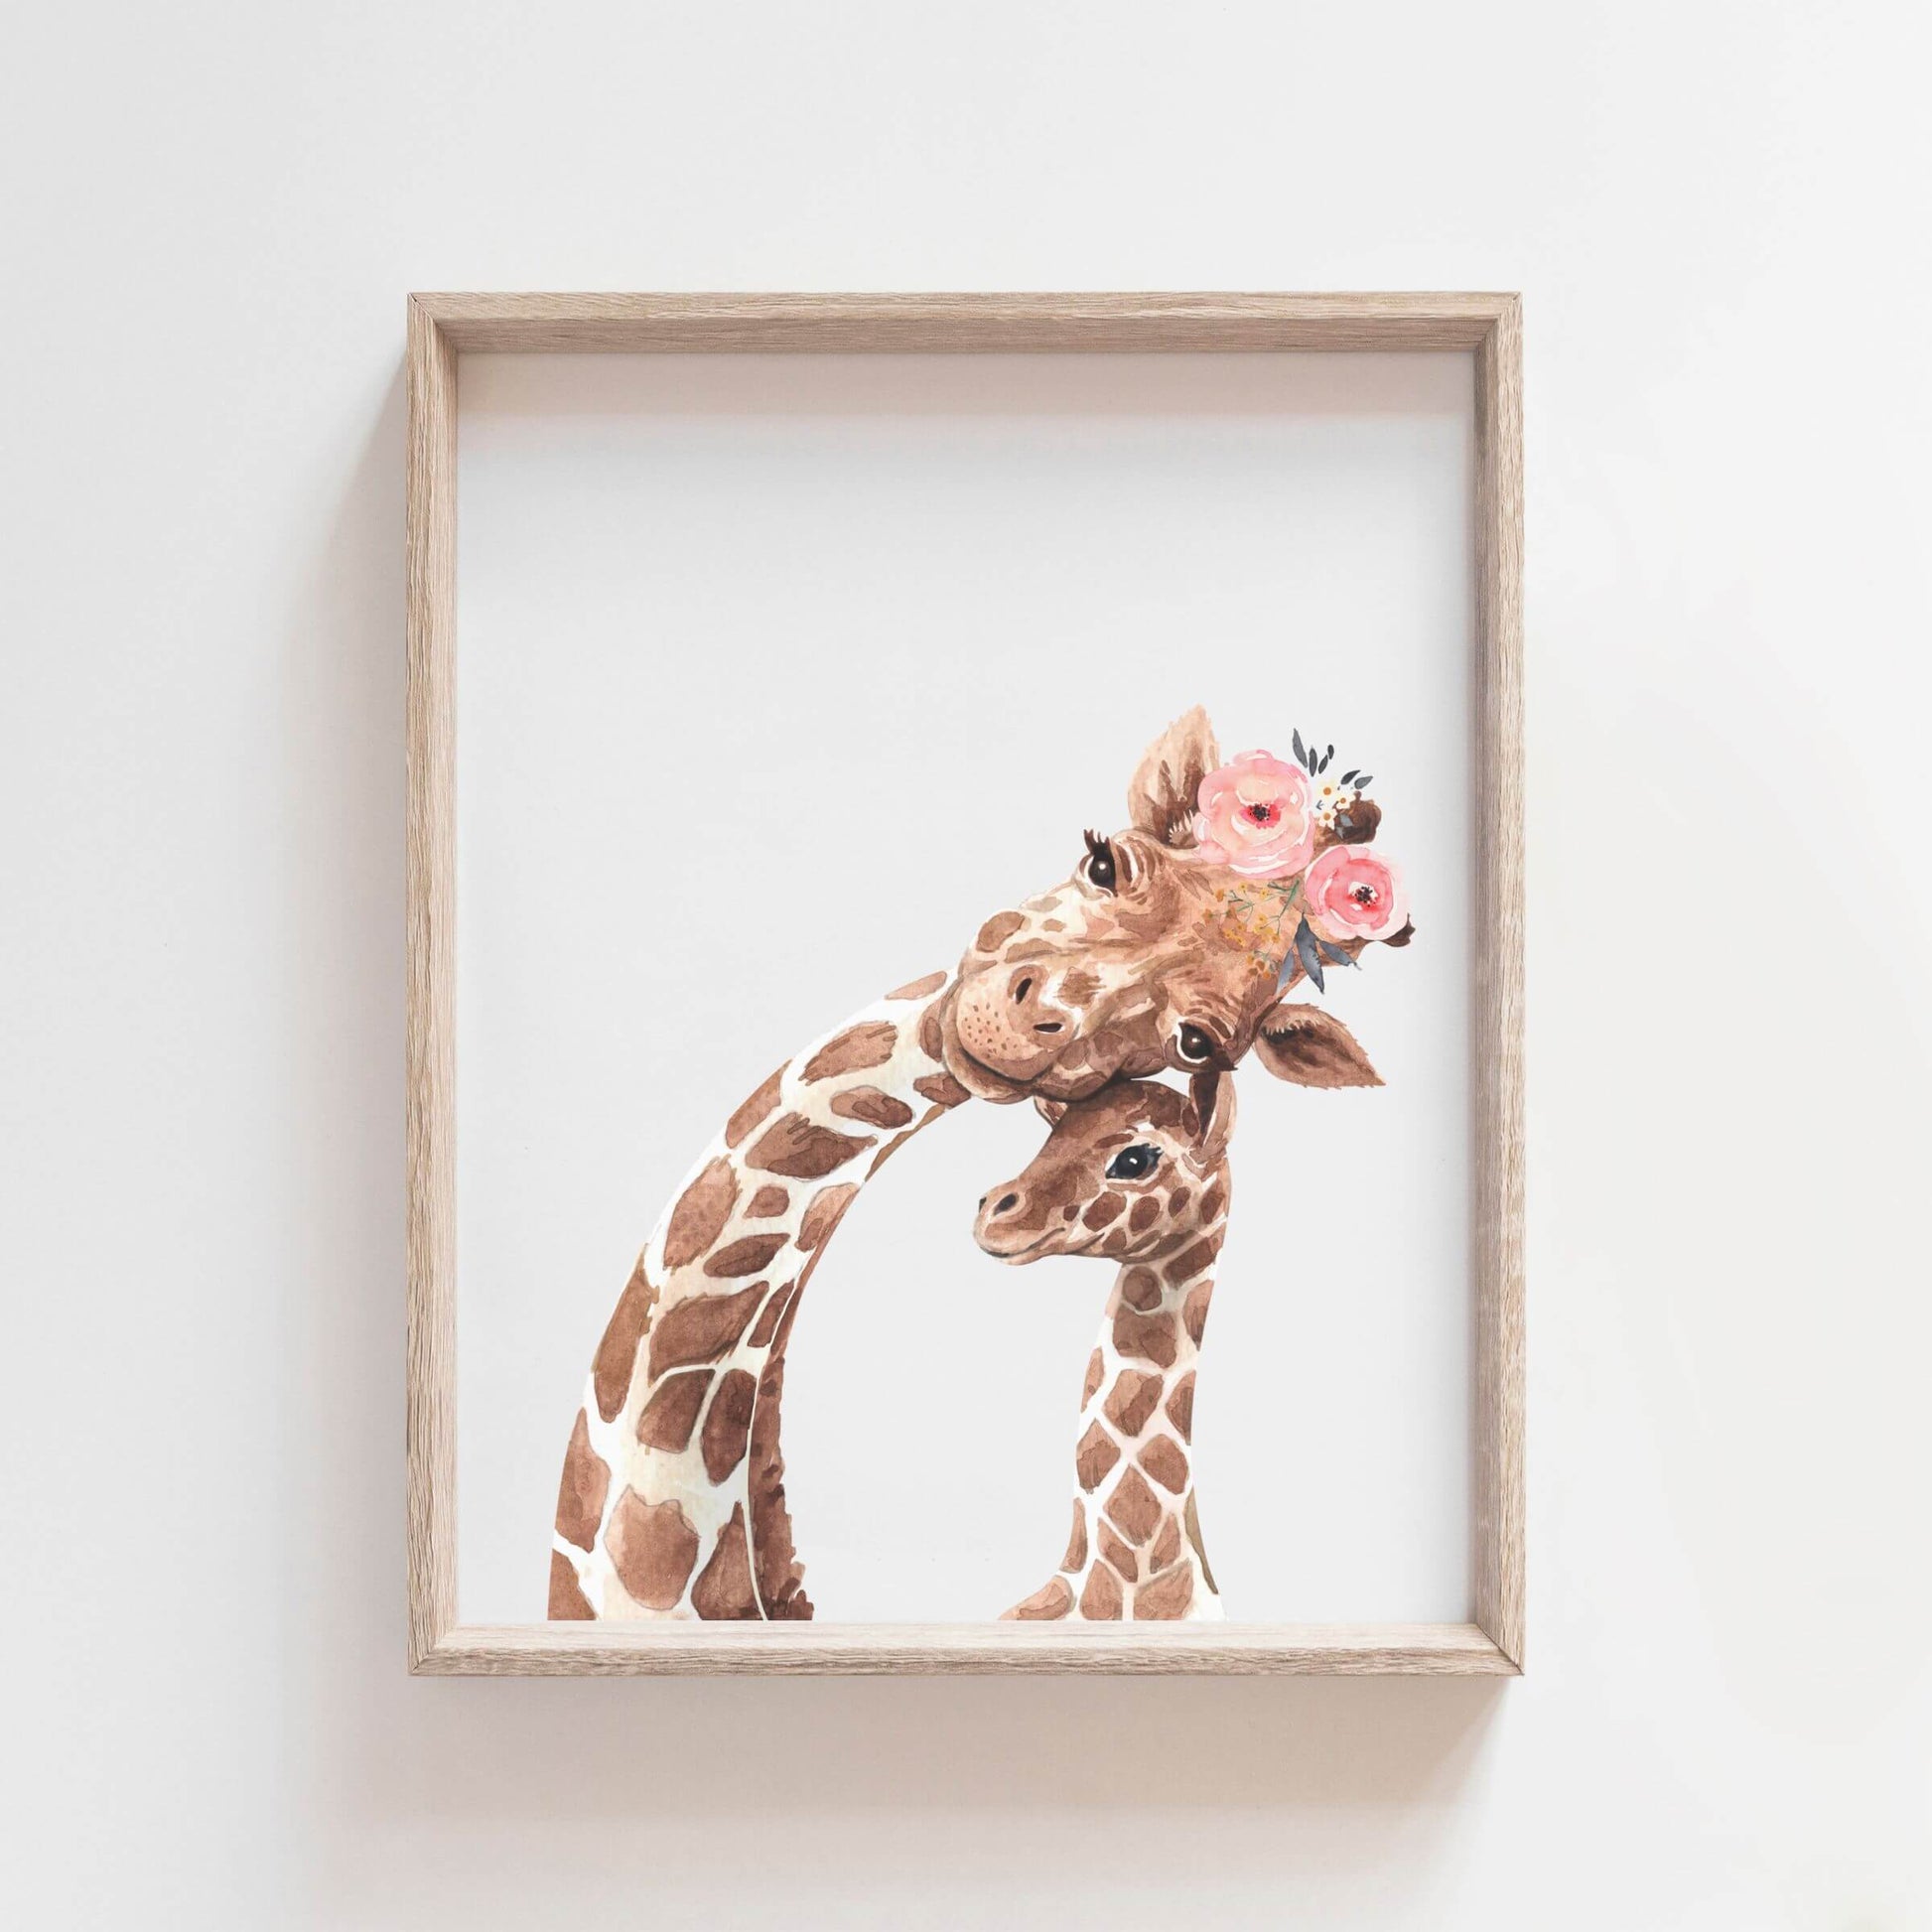 mom giraffe wearing a pink flower crown snuggling up to her baby giraffe. Nursery wall art for girl room.